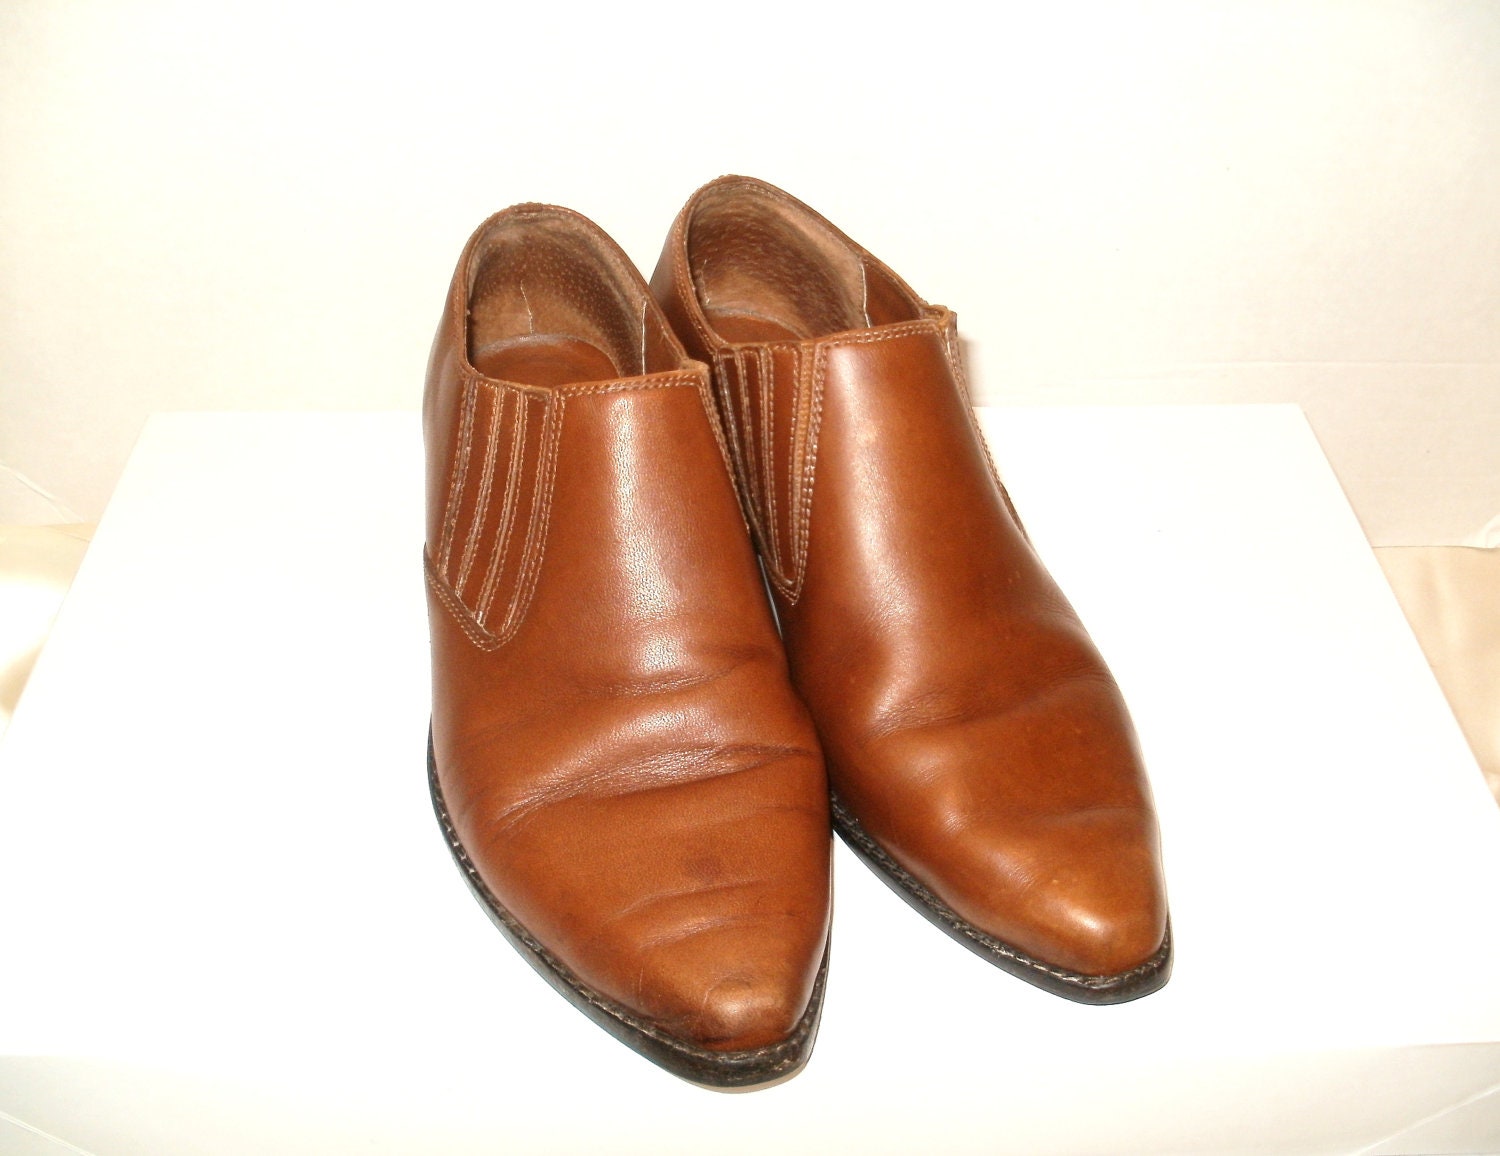 Vintage Nine West Western Boots Ankle Booties by NewGrooveVintage